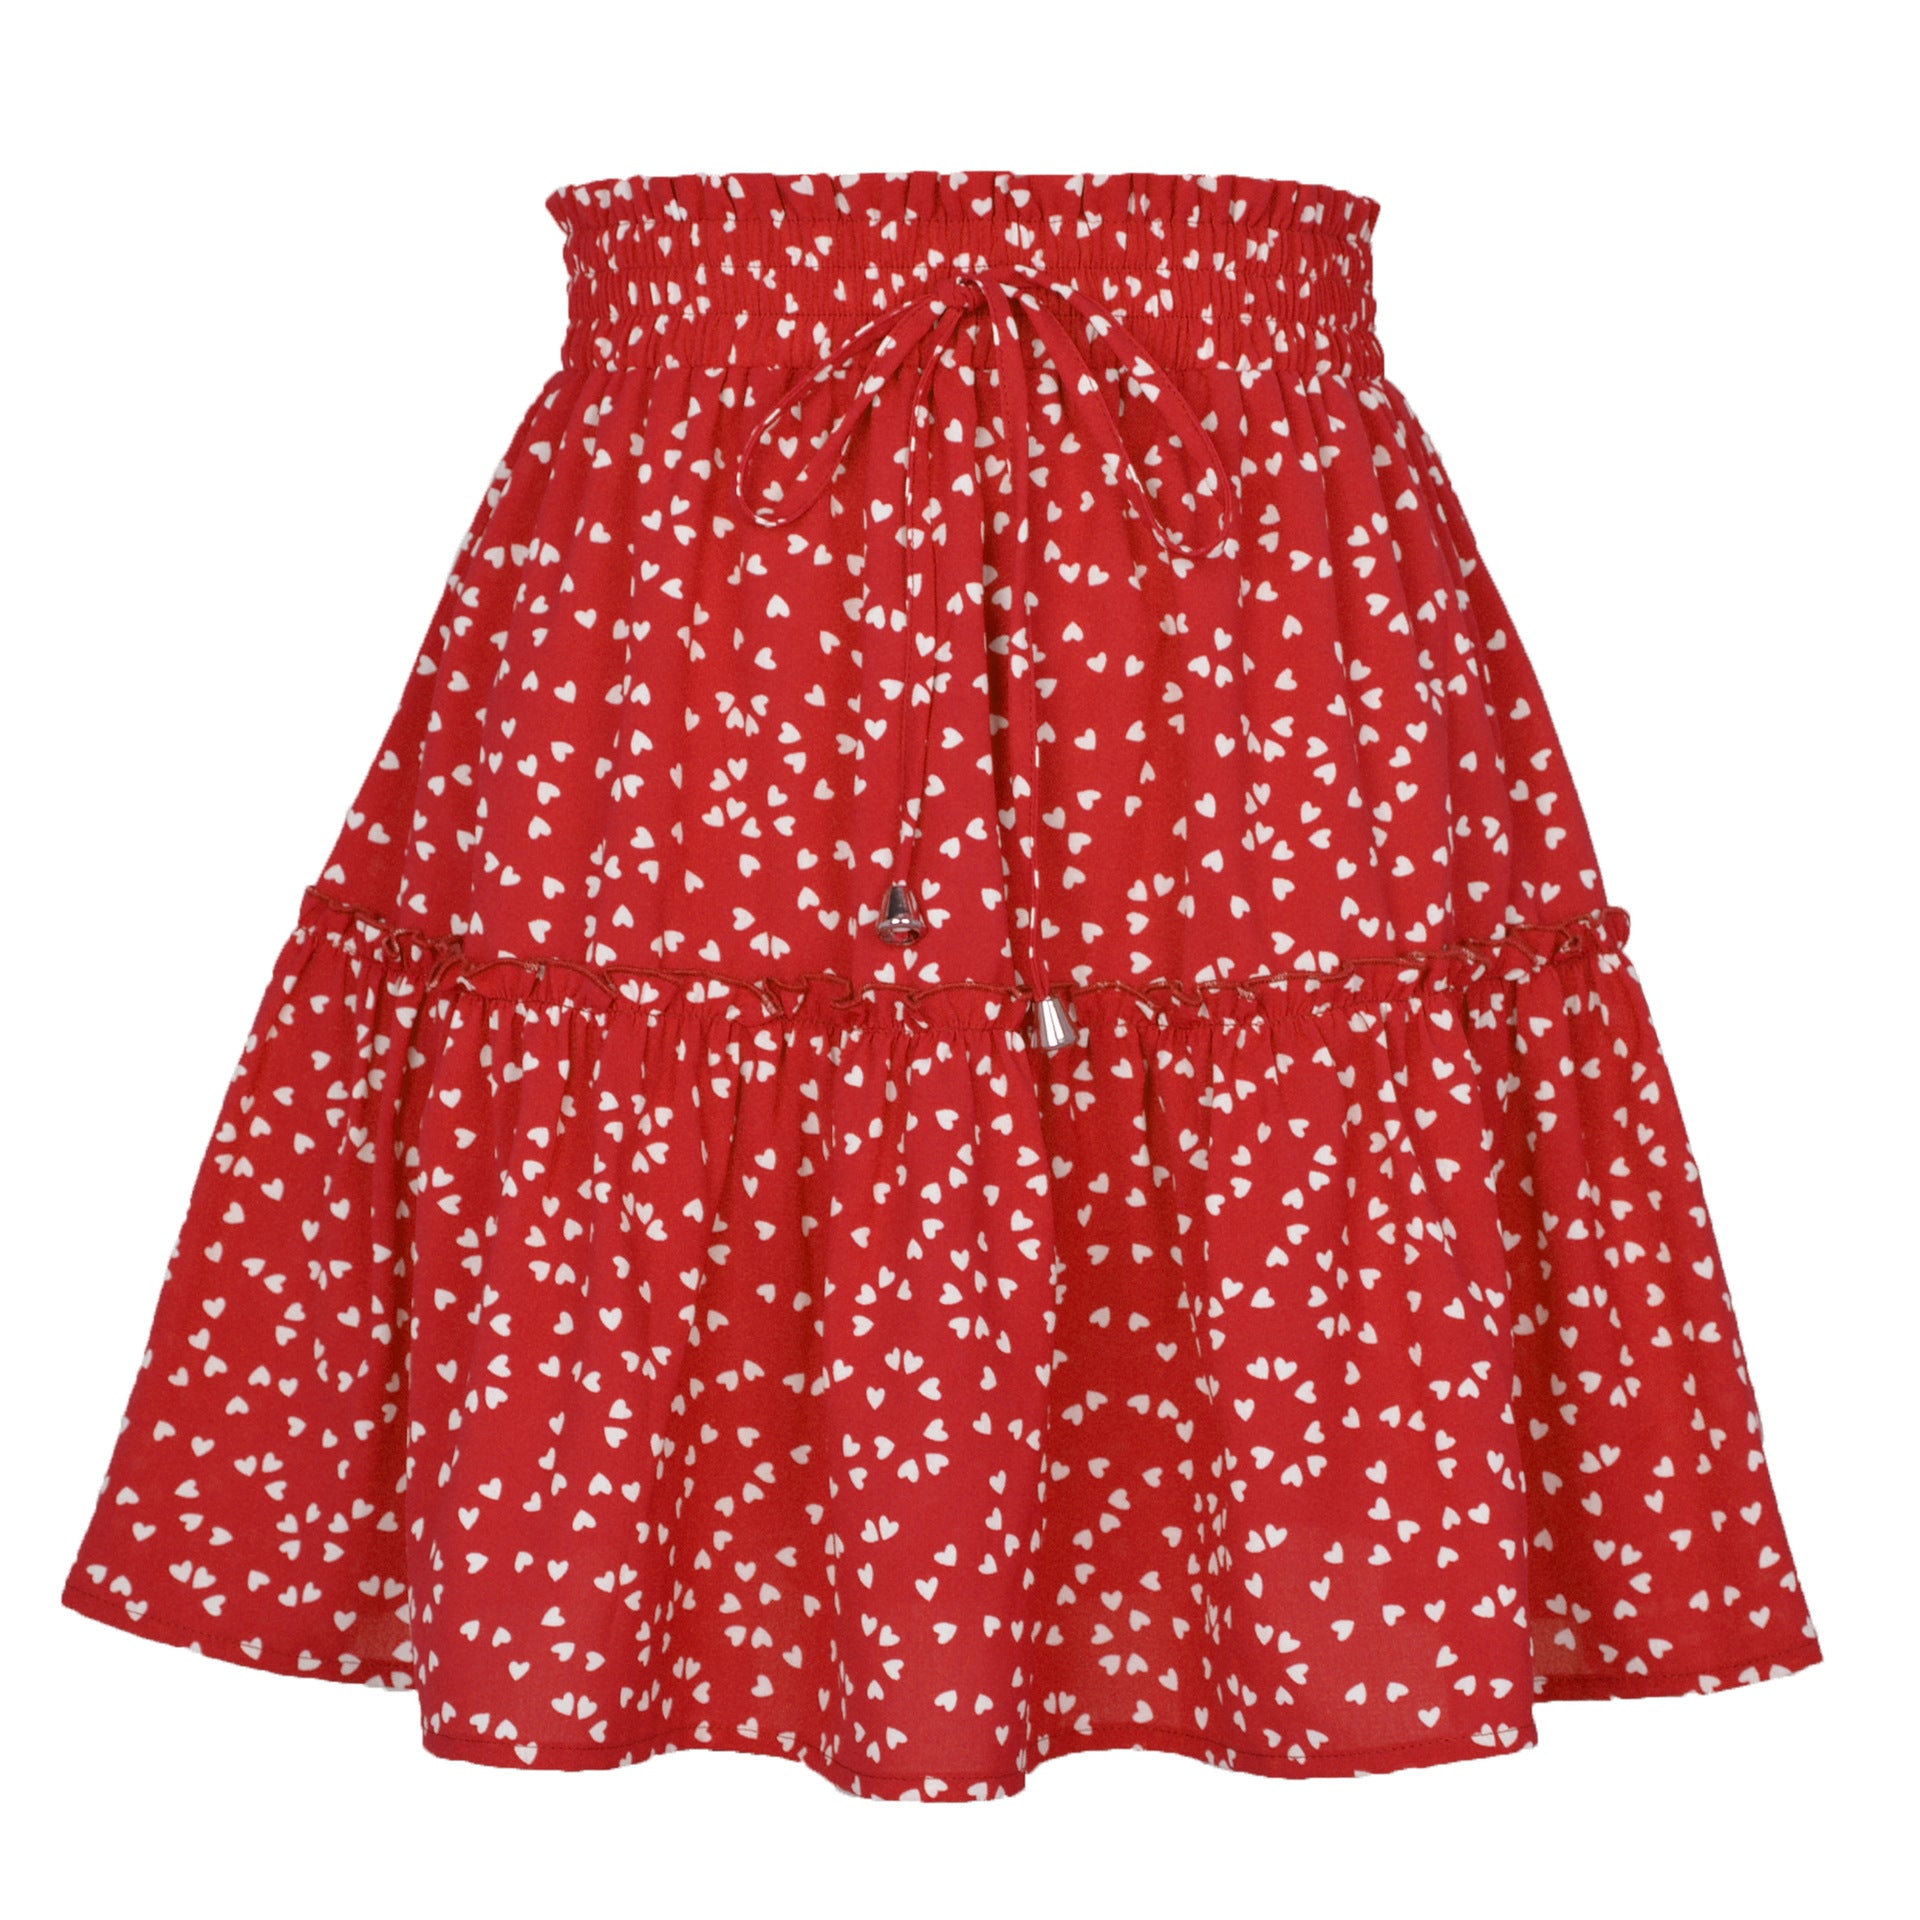 Fibra de poliéster impressa na cintura alta feminina pequena saia curta floral